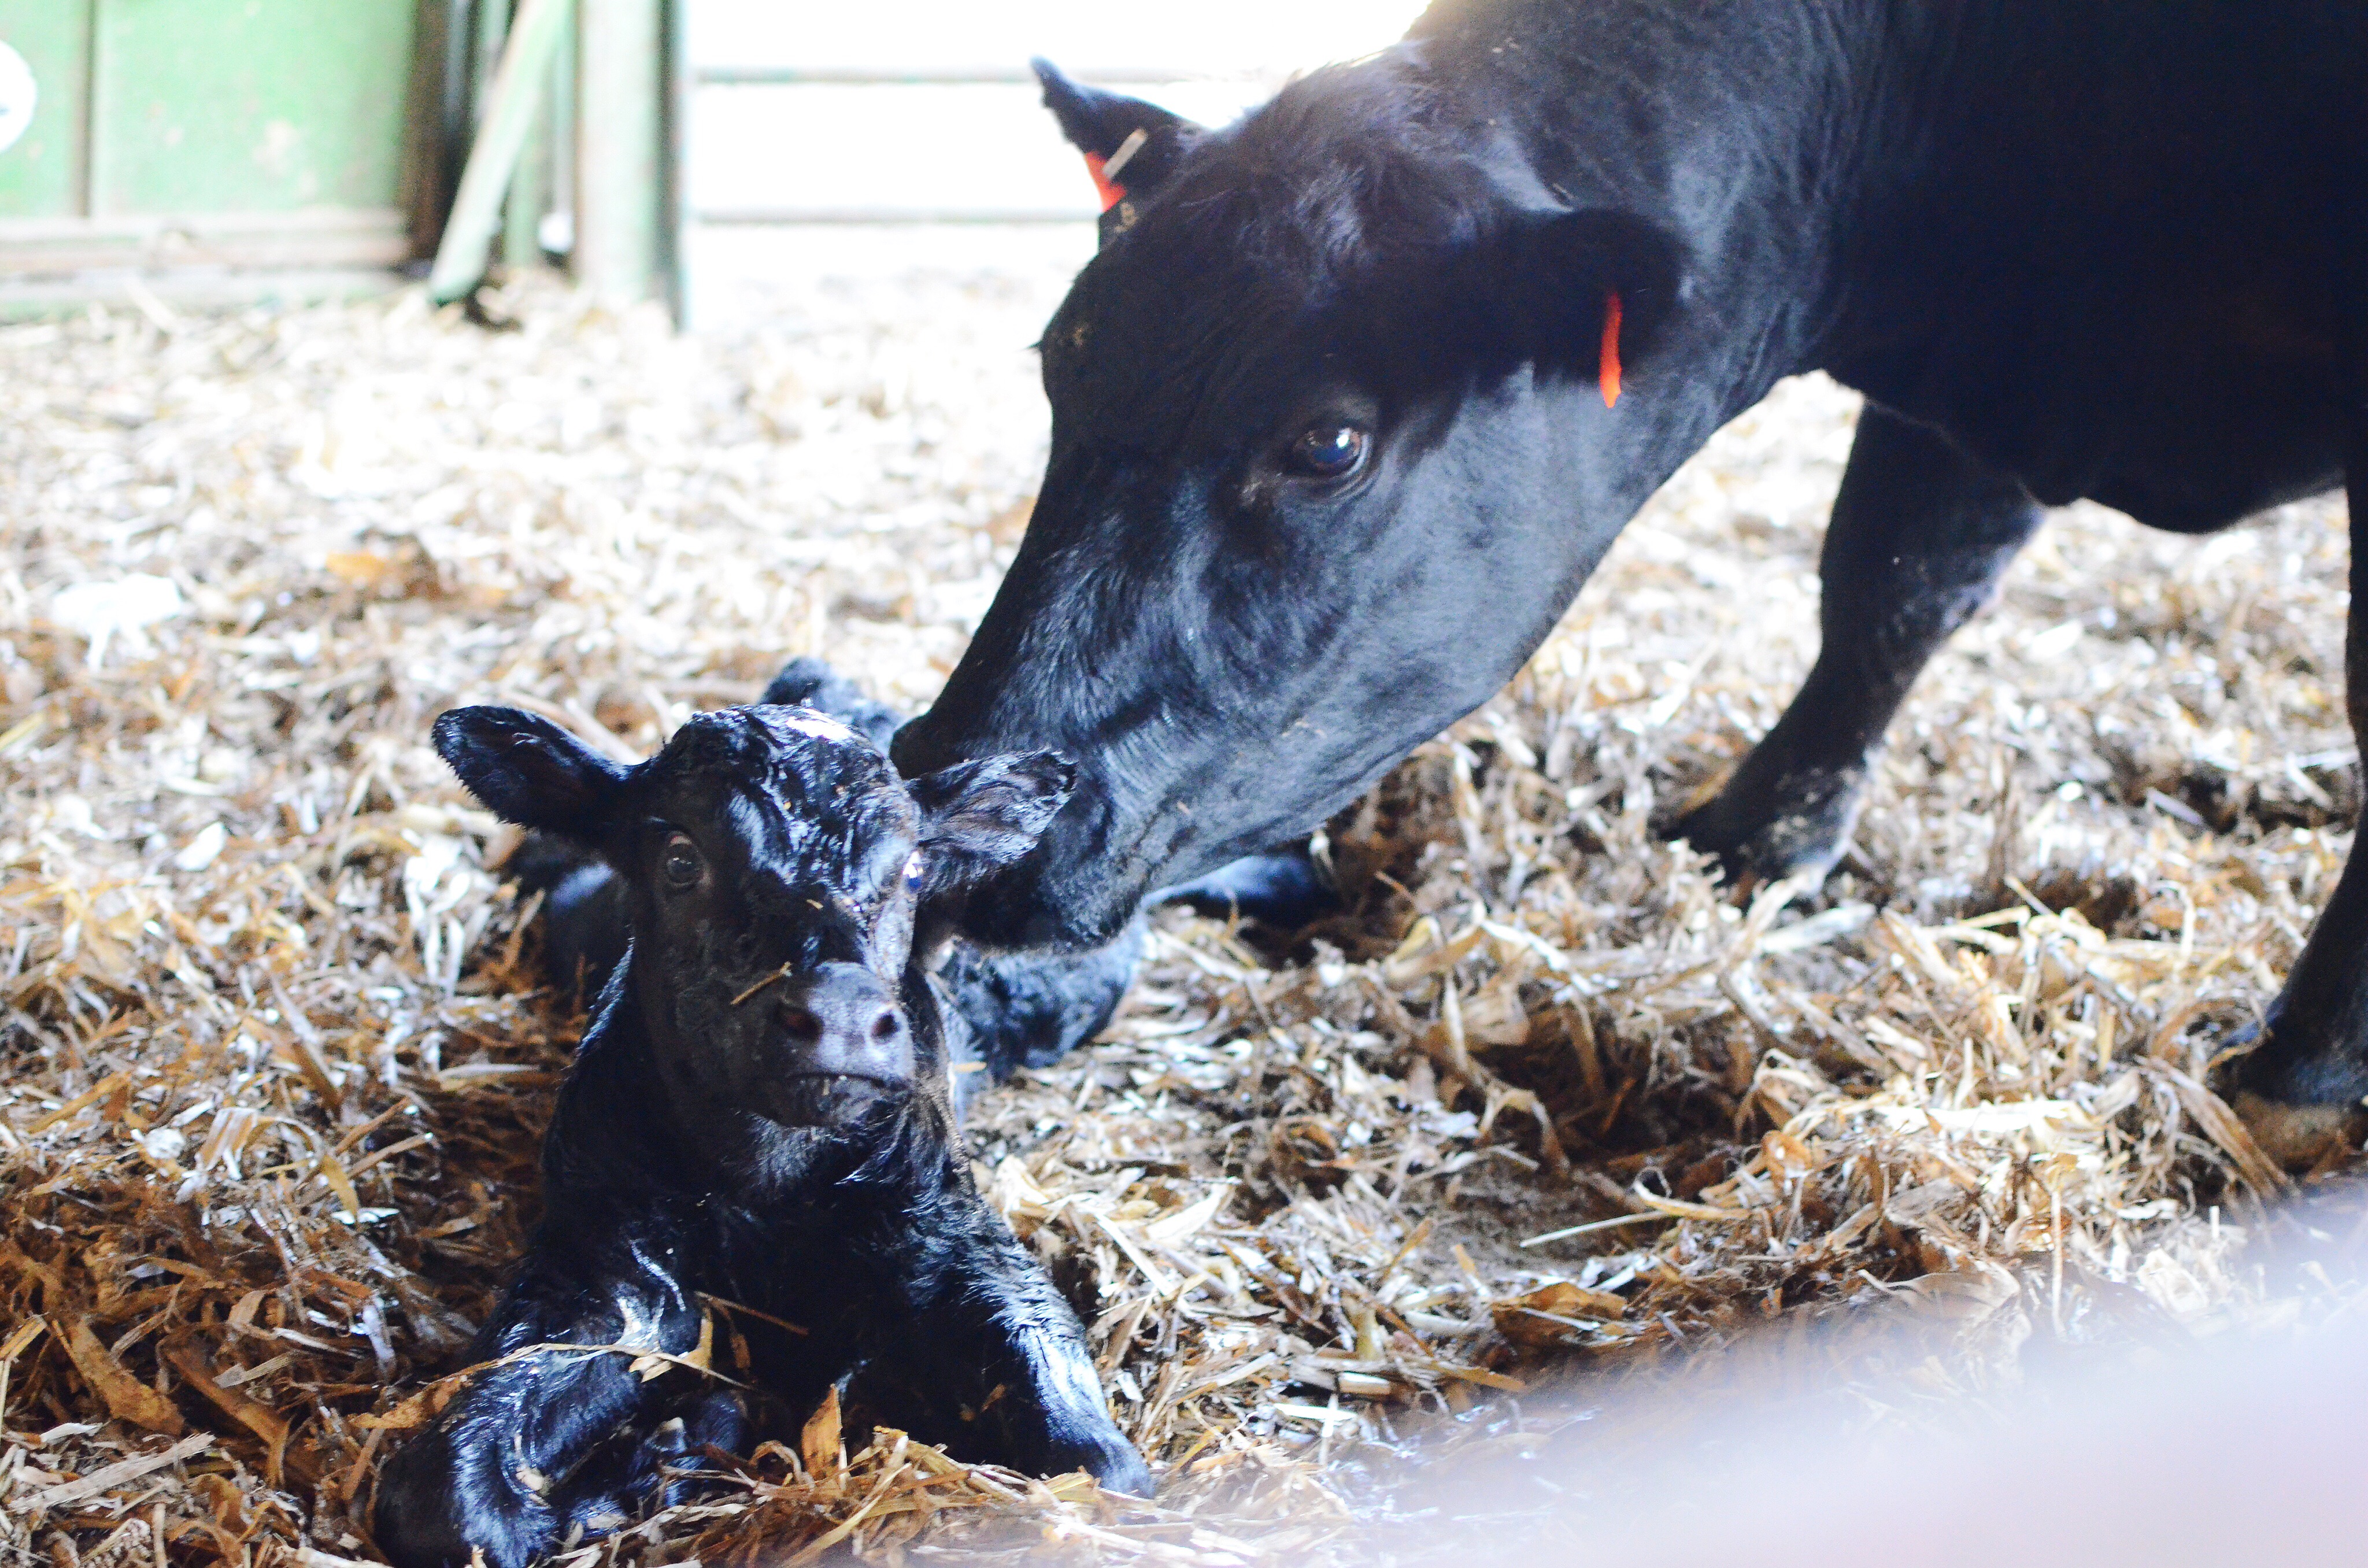 newborn baby cow